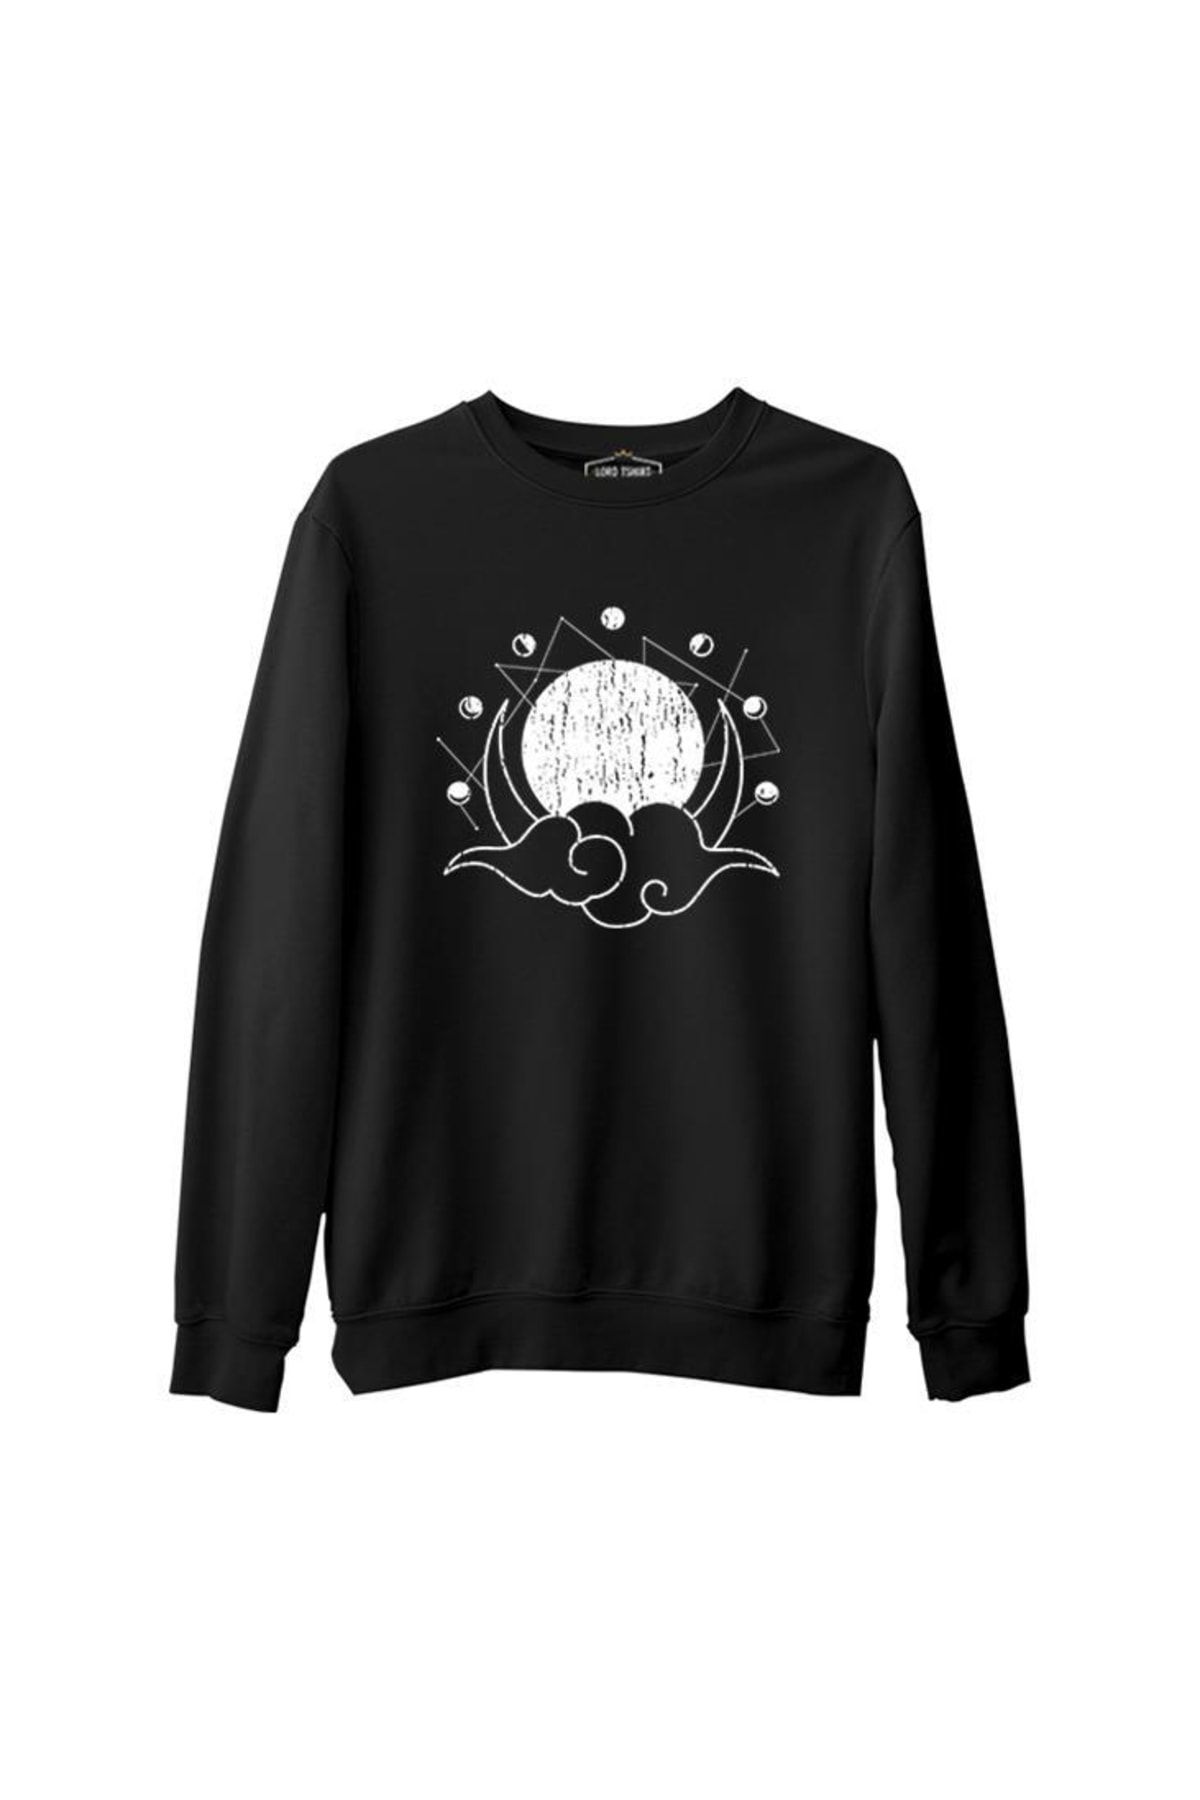 Lord T-Shirt Moon Phases Behind A Cloud Siyah Erkek Kalın Sweatshirt